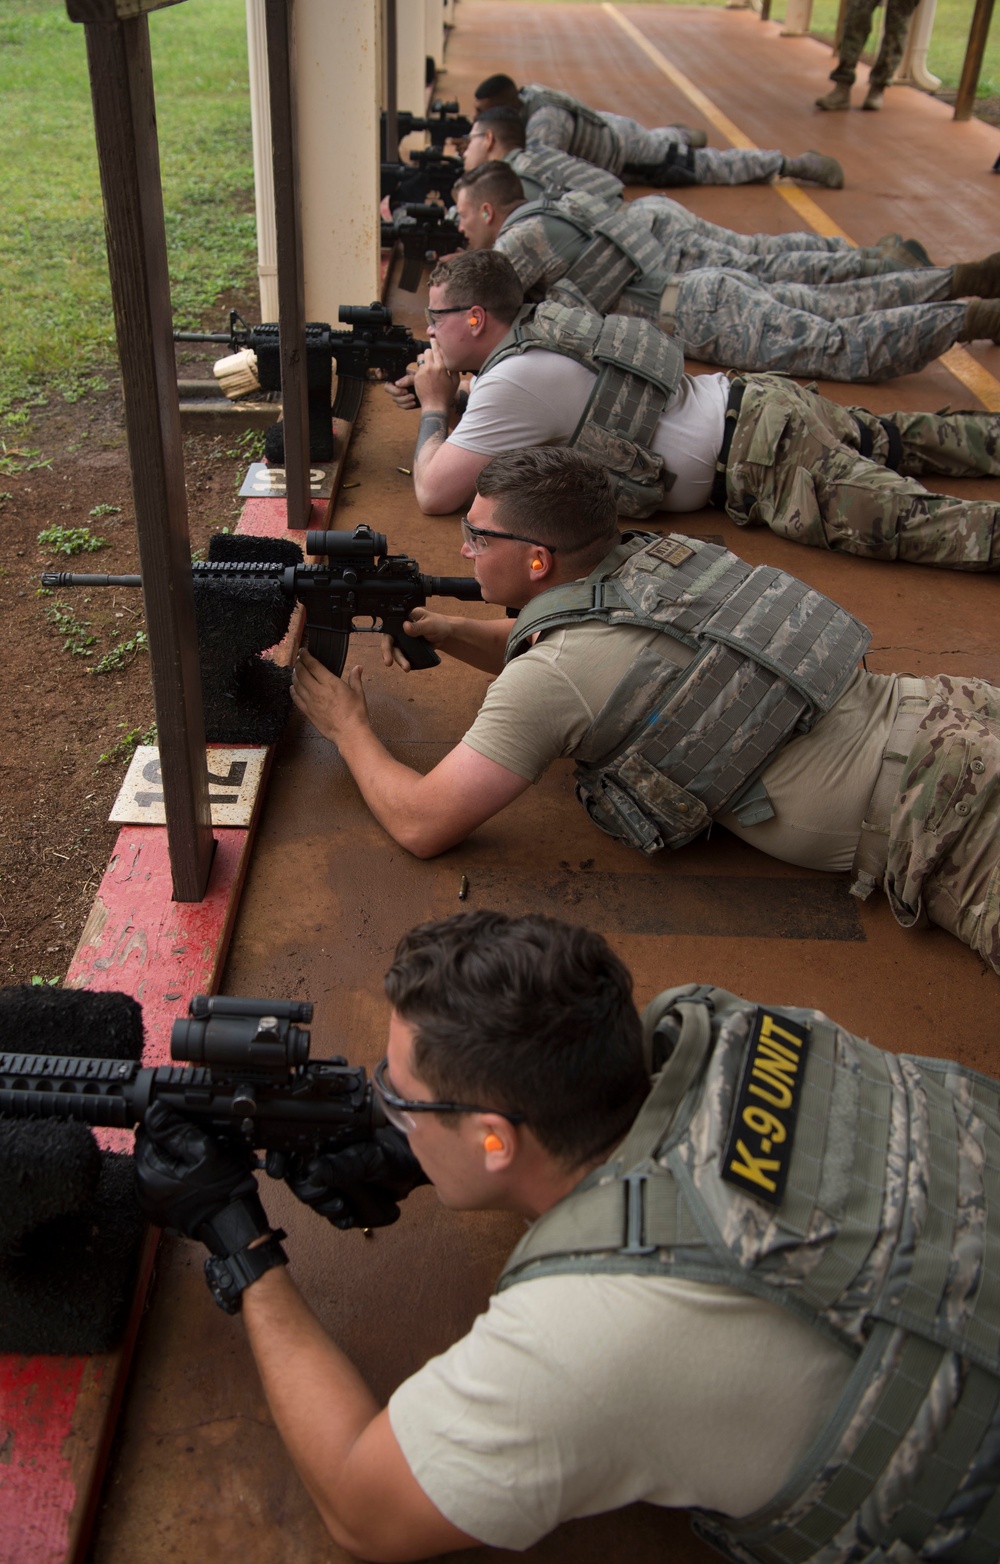 JB Security members demonstrate skills at range